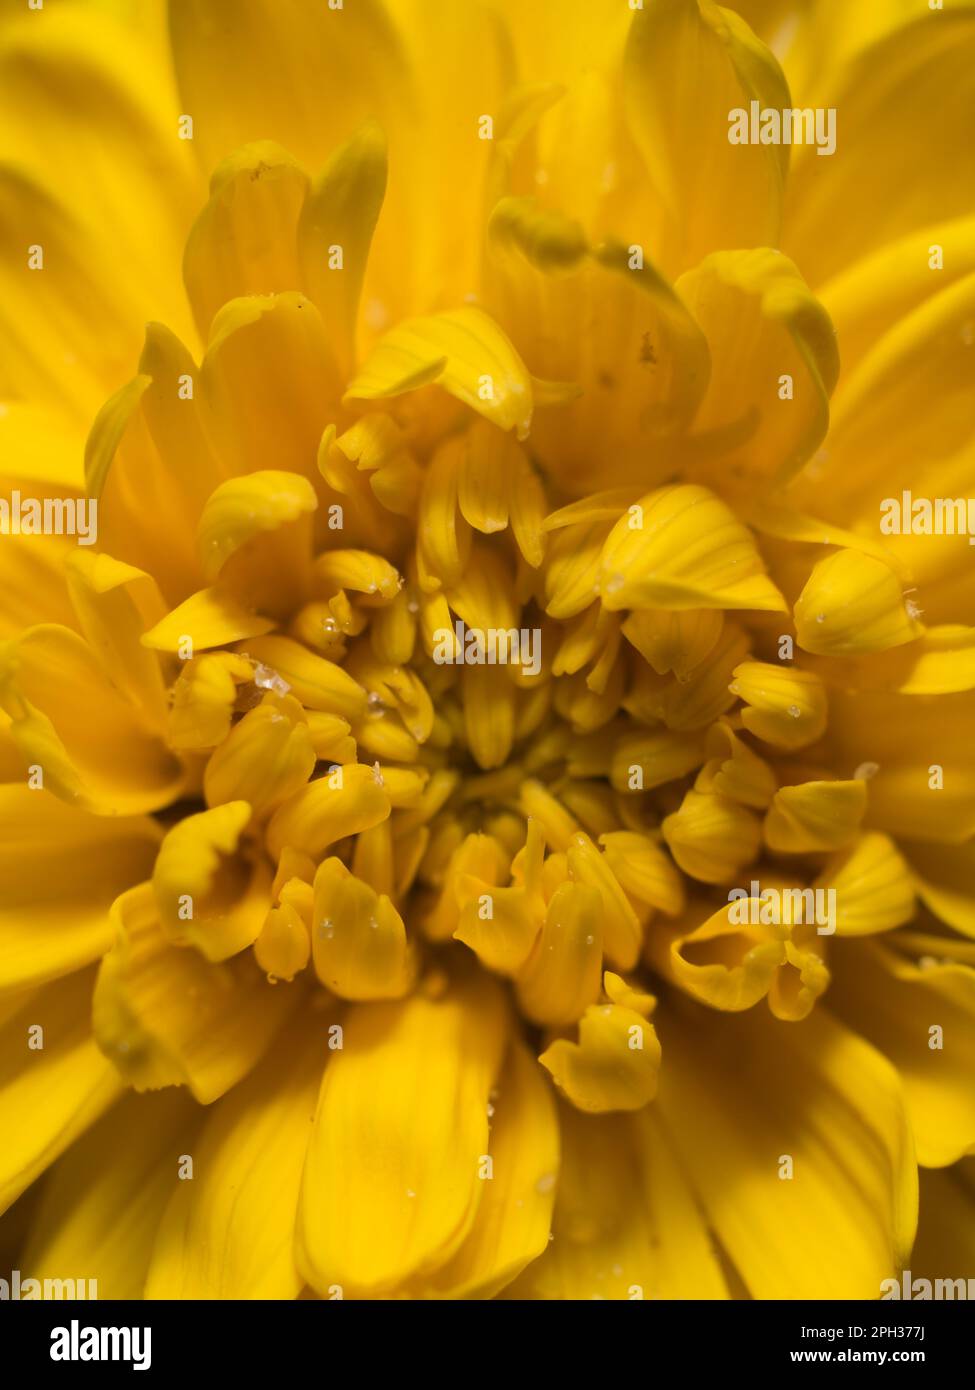 yellow flower close up opening Stock Photo